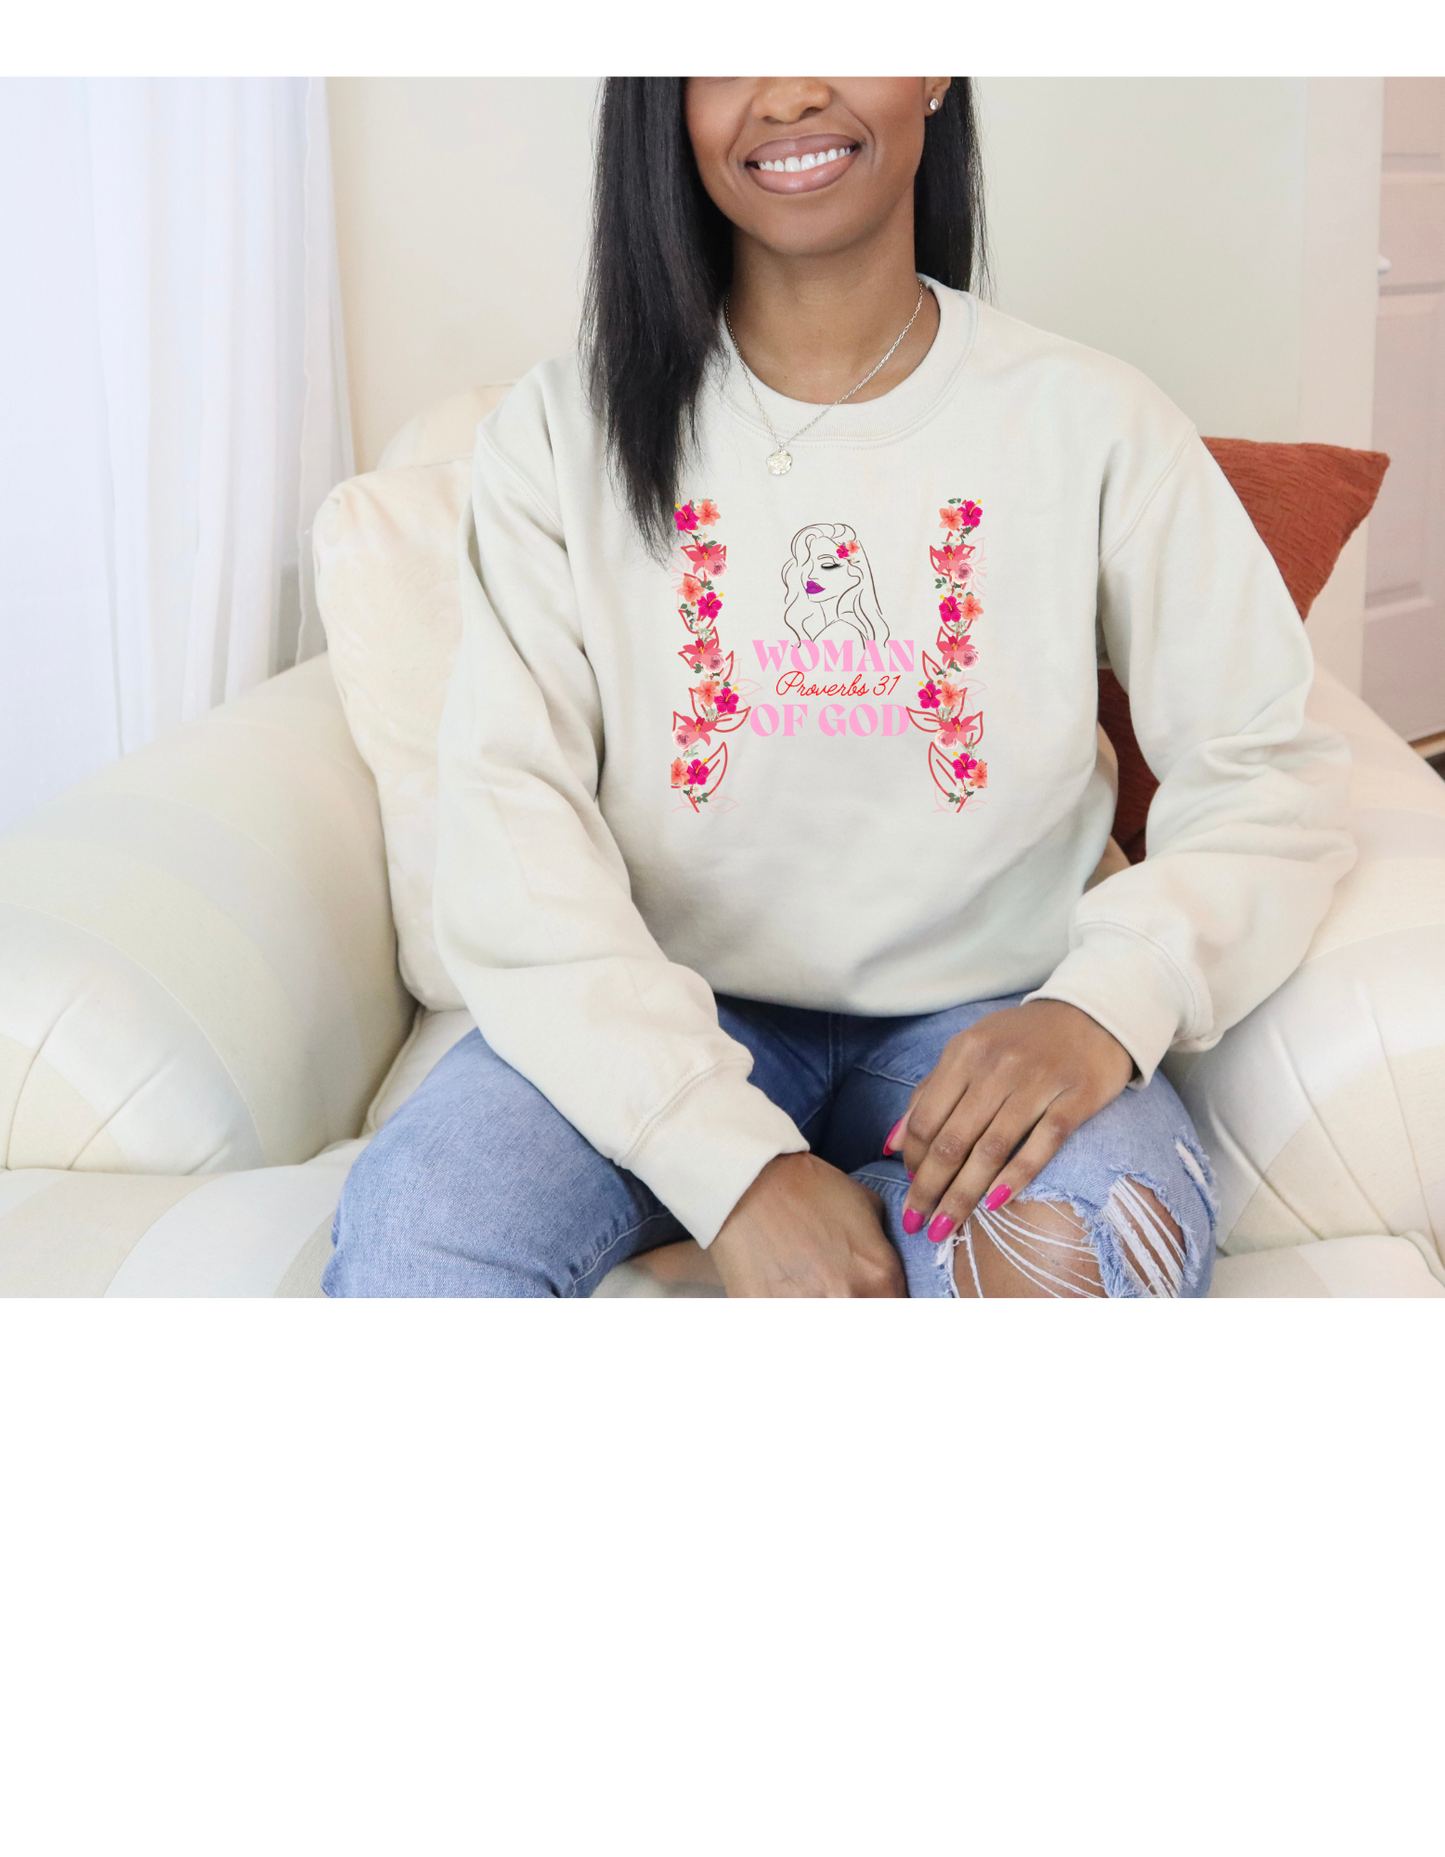 Black- Woman of God Crewneck Sweatshirt